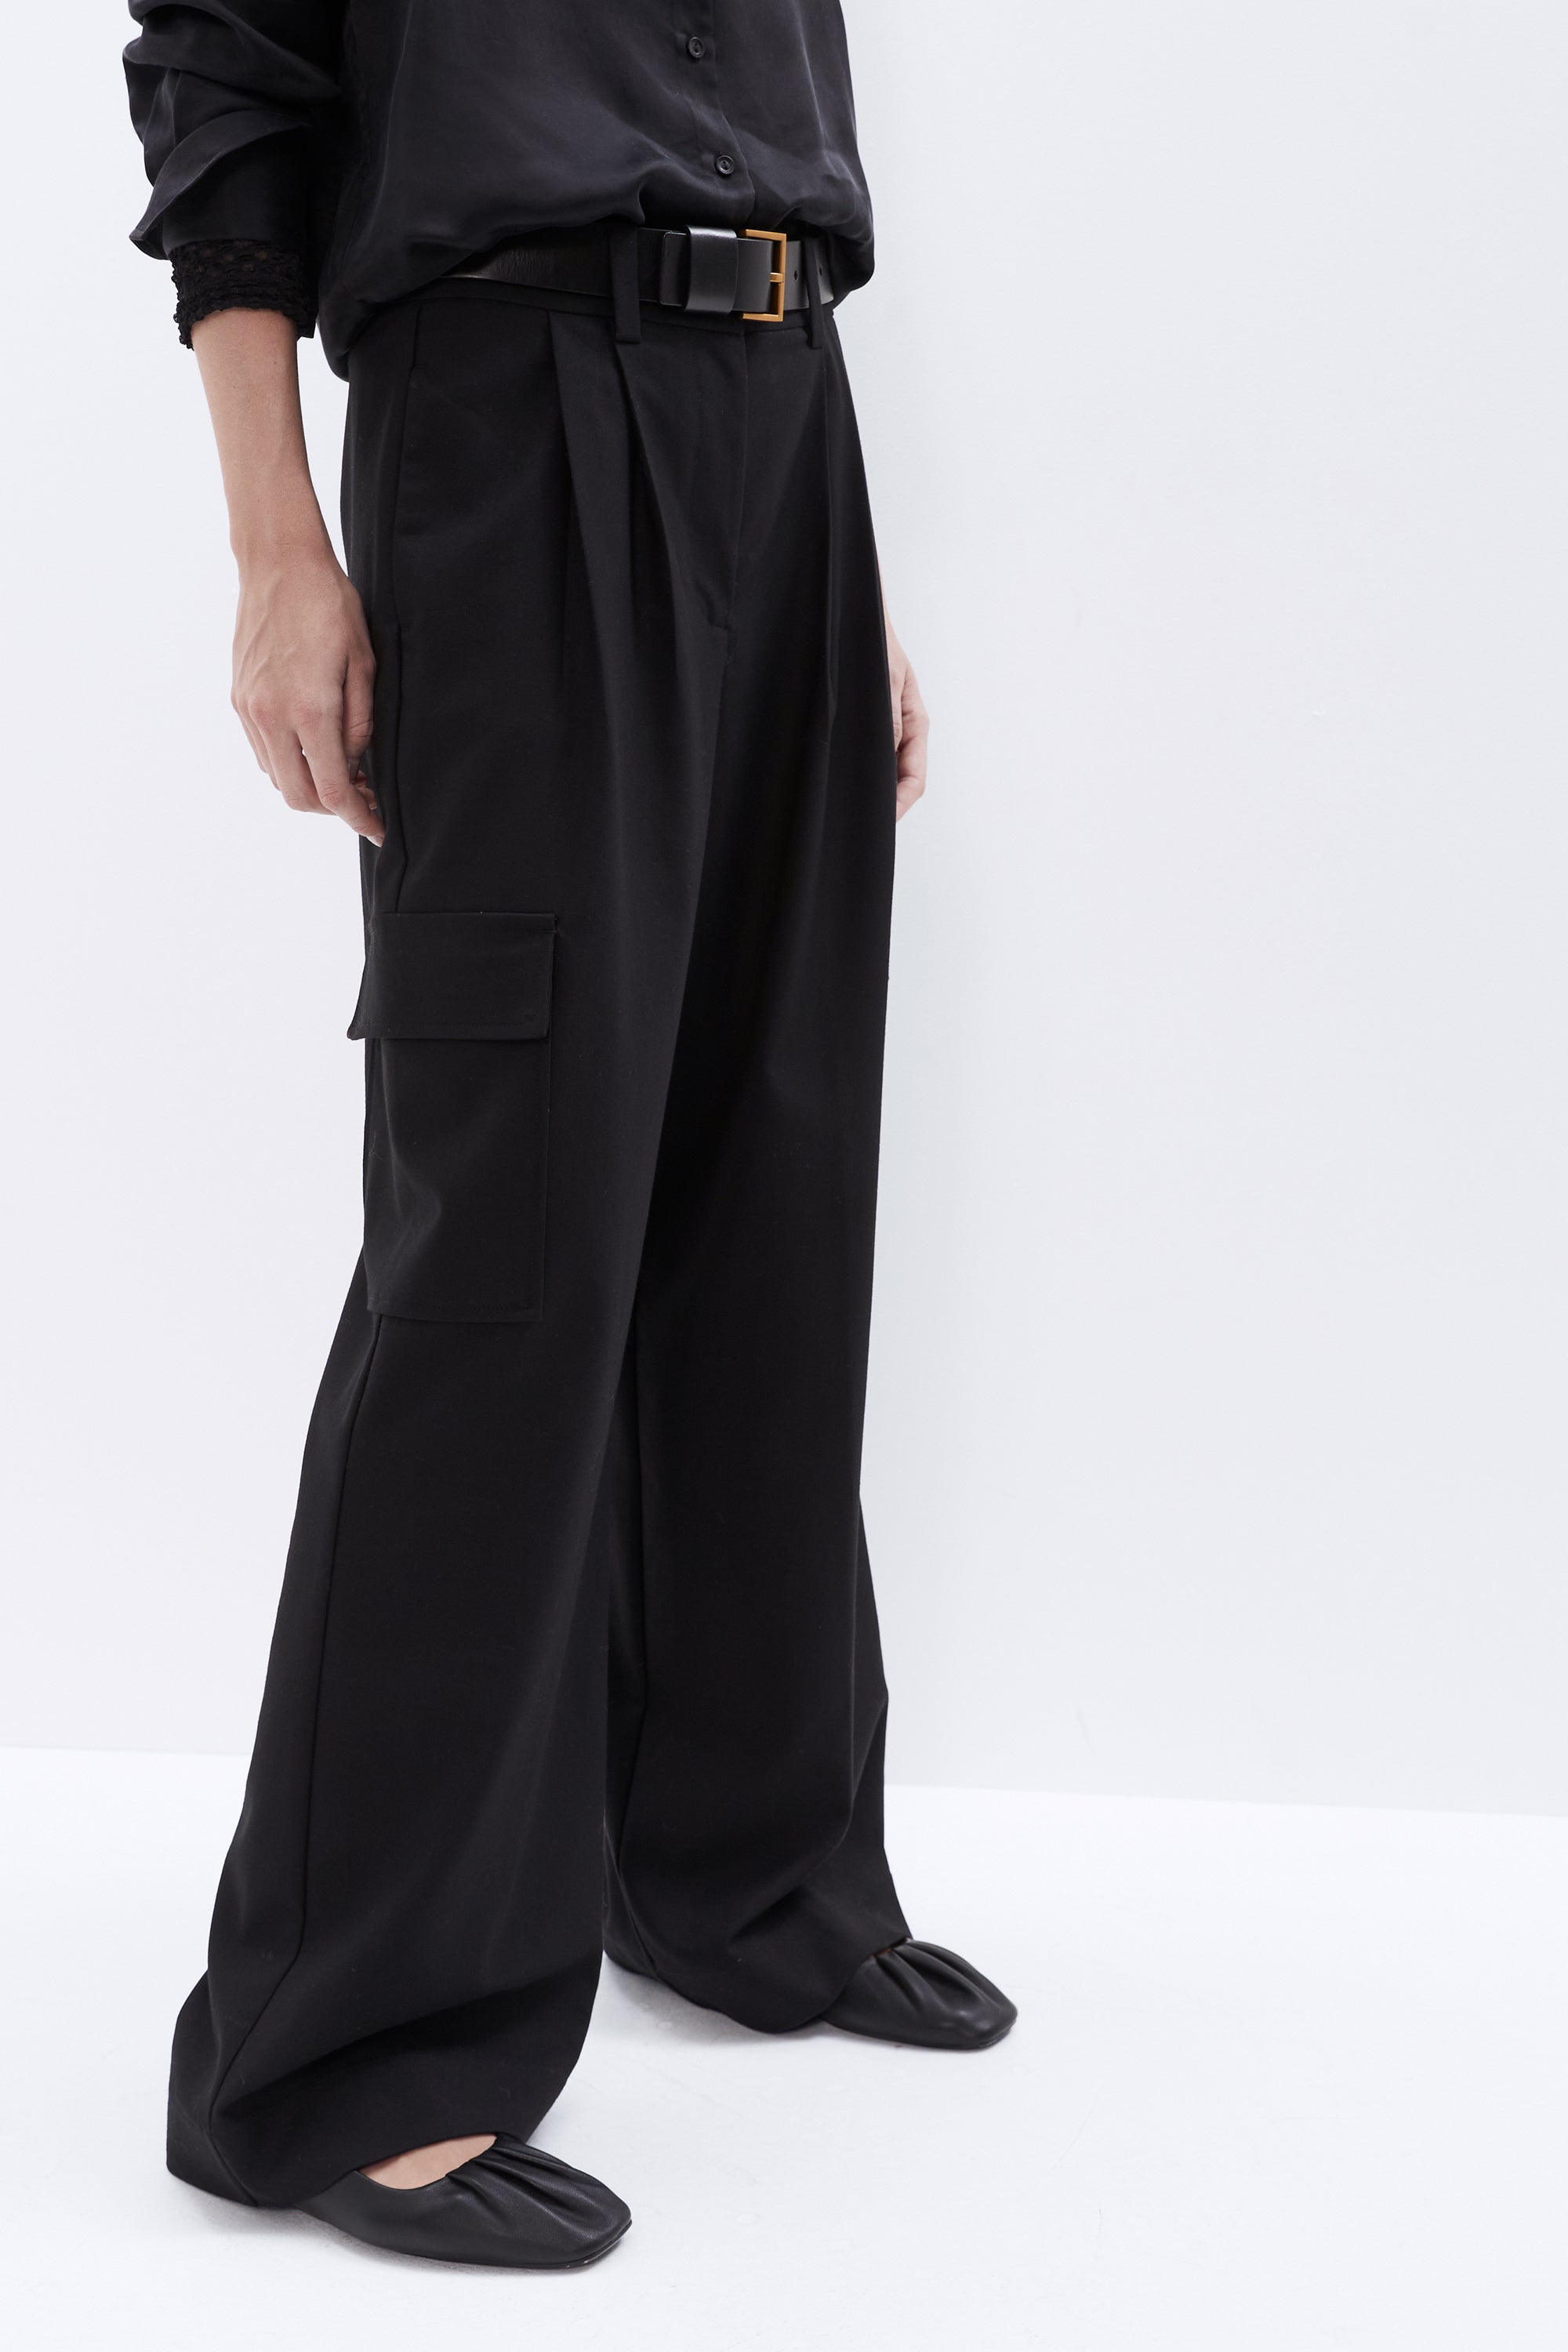 Women's Pants: Casual & Dress Slacks for Women